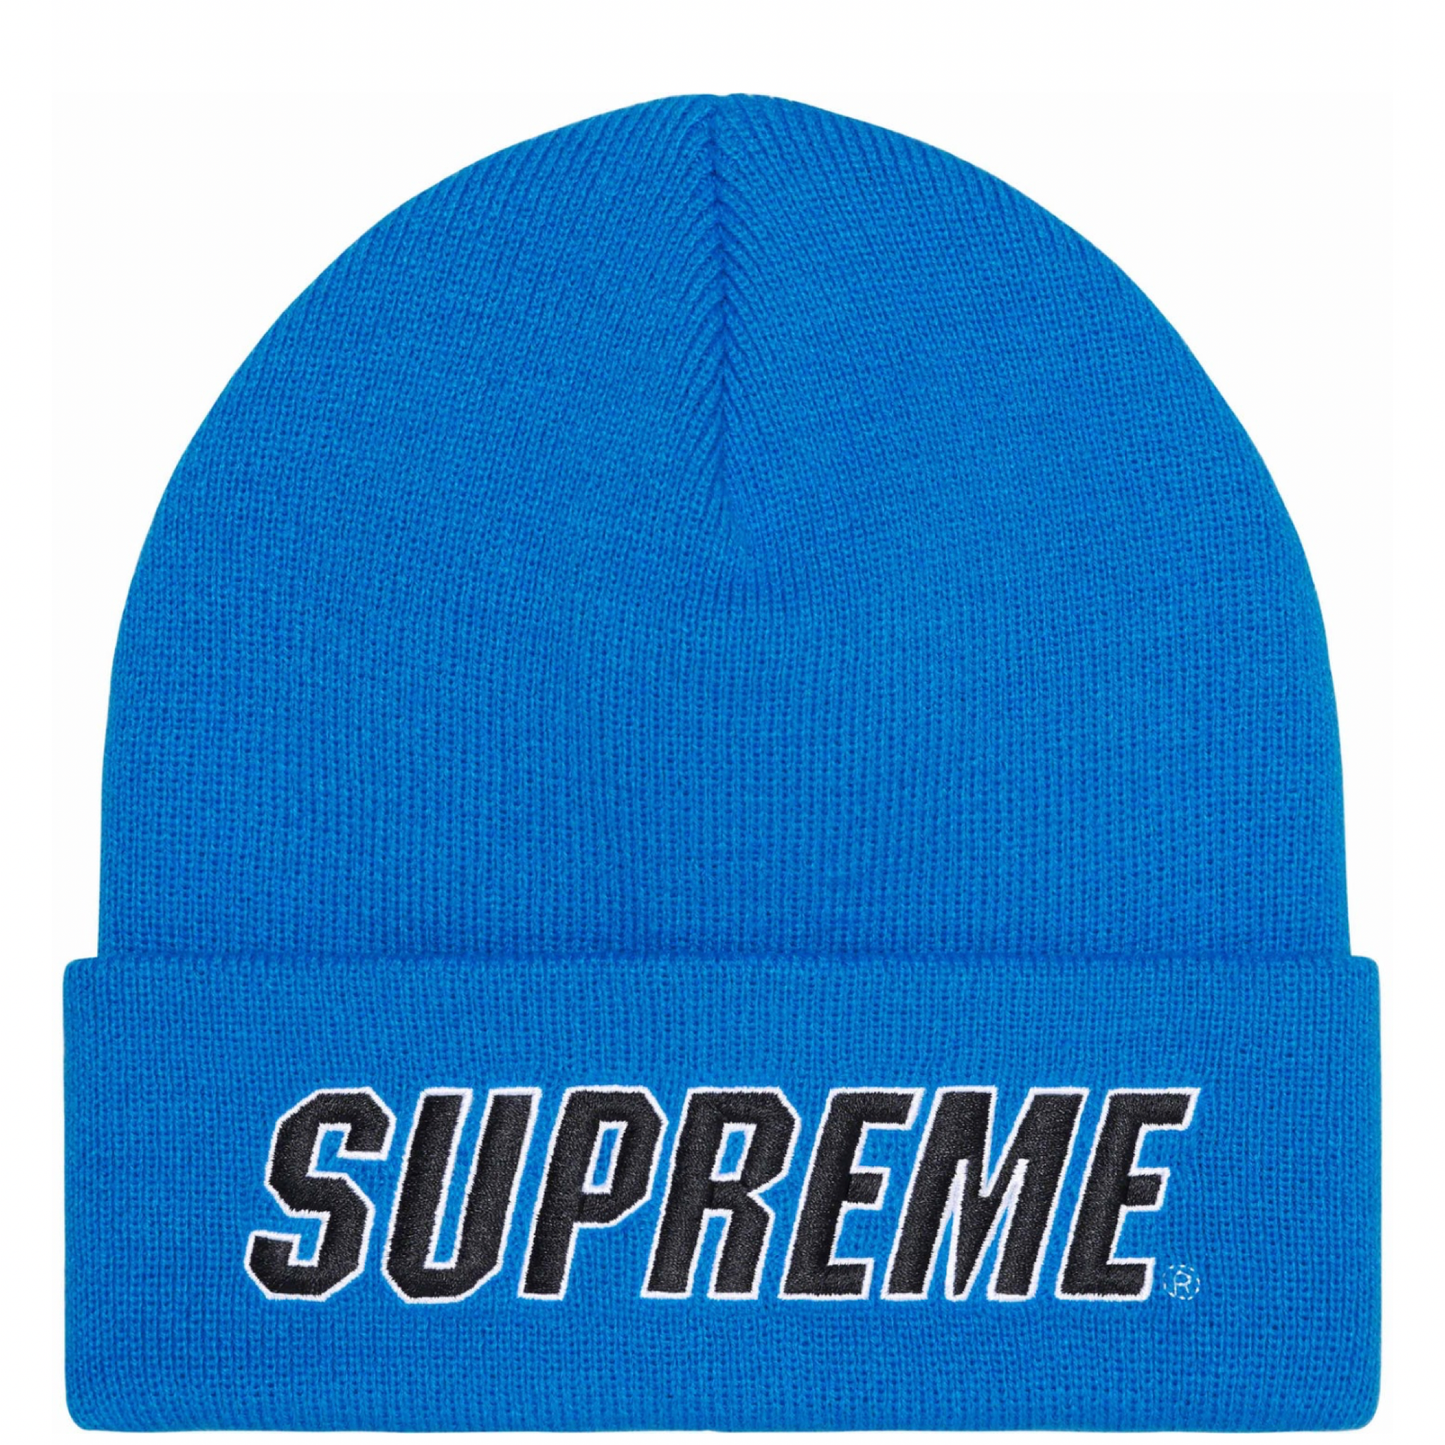 Supreme Blue Logo Beanie - DANYOUNGUK